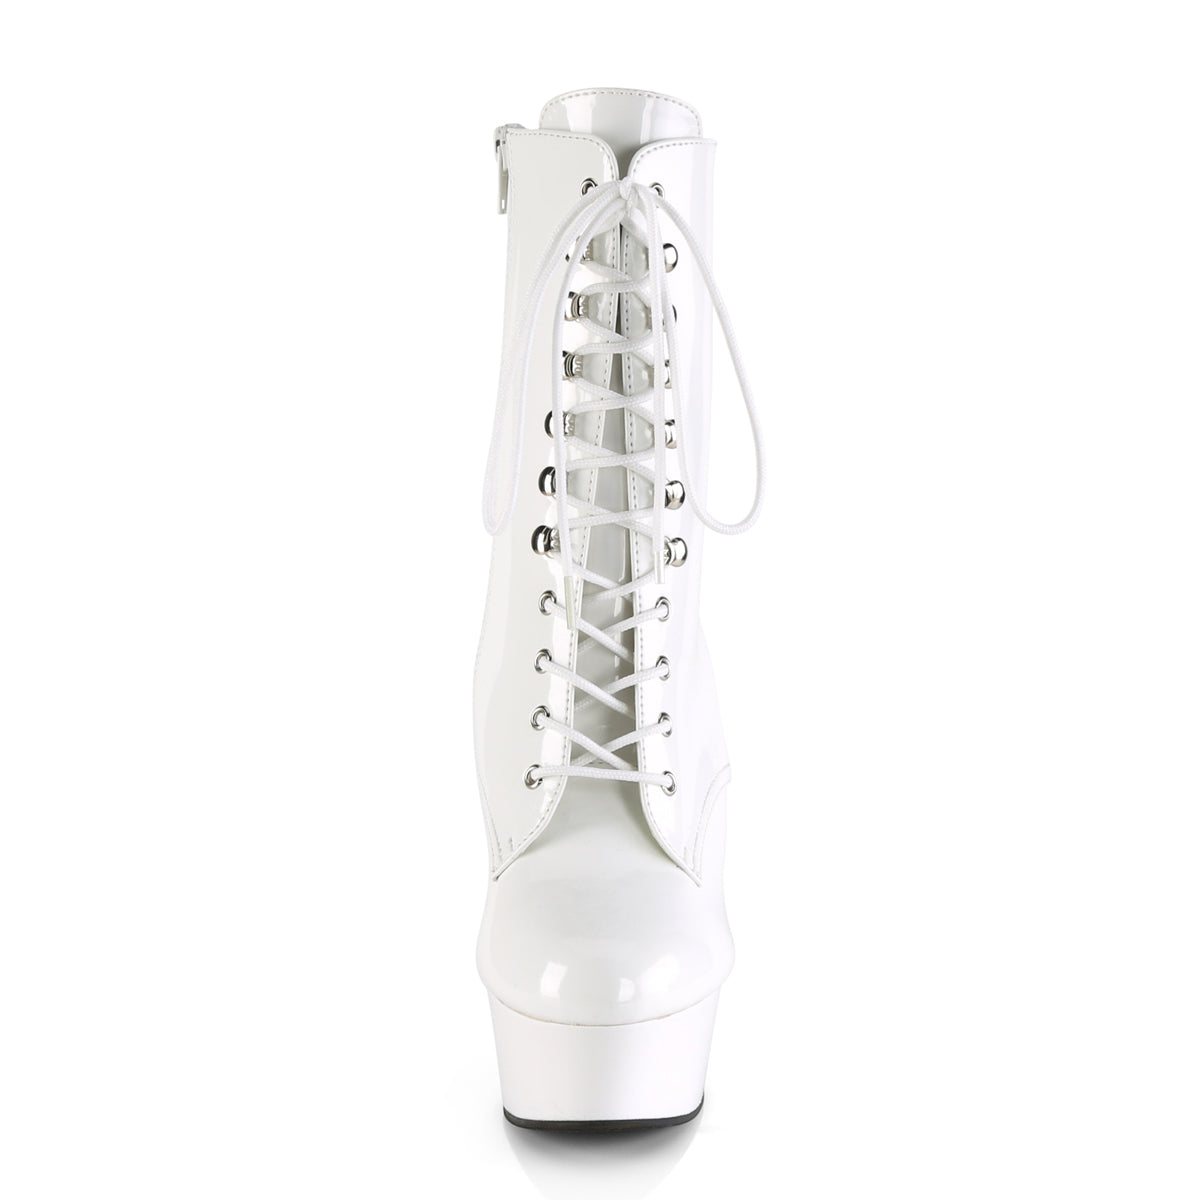 DELIGHT-1020 White Calf High Boots